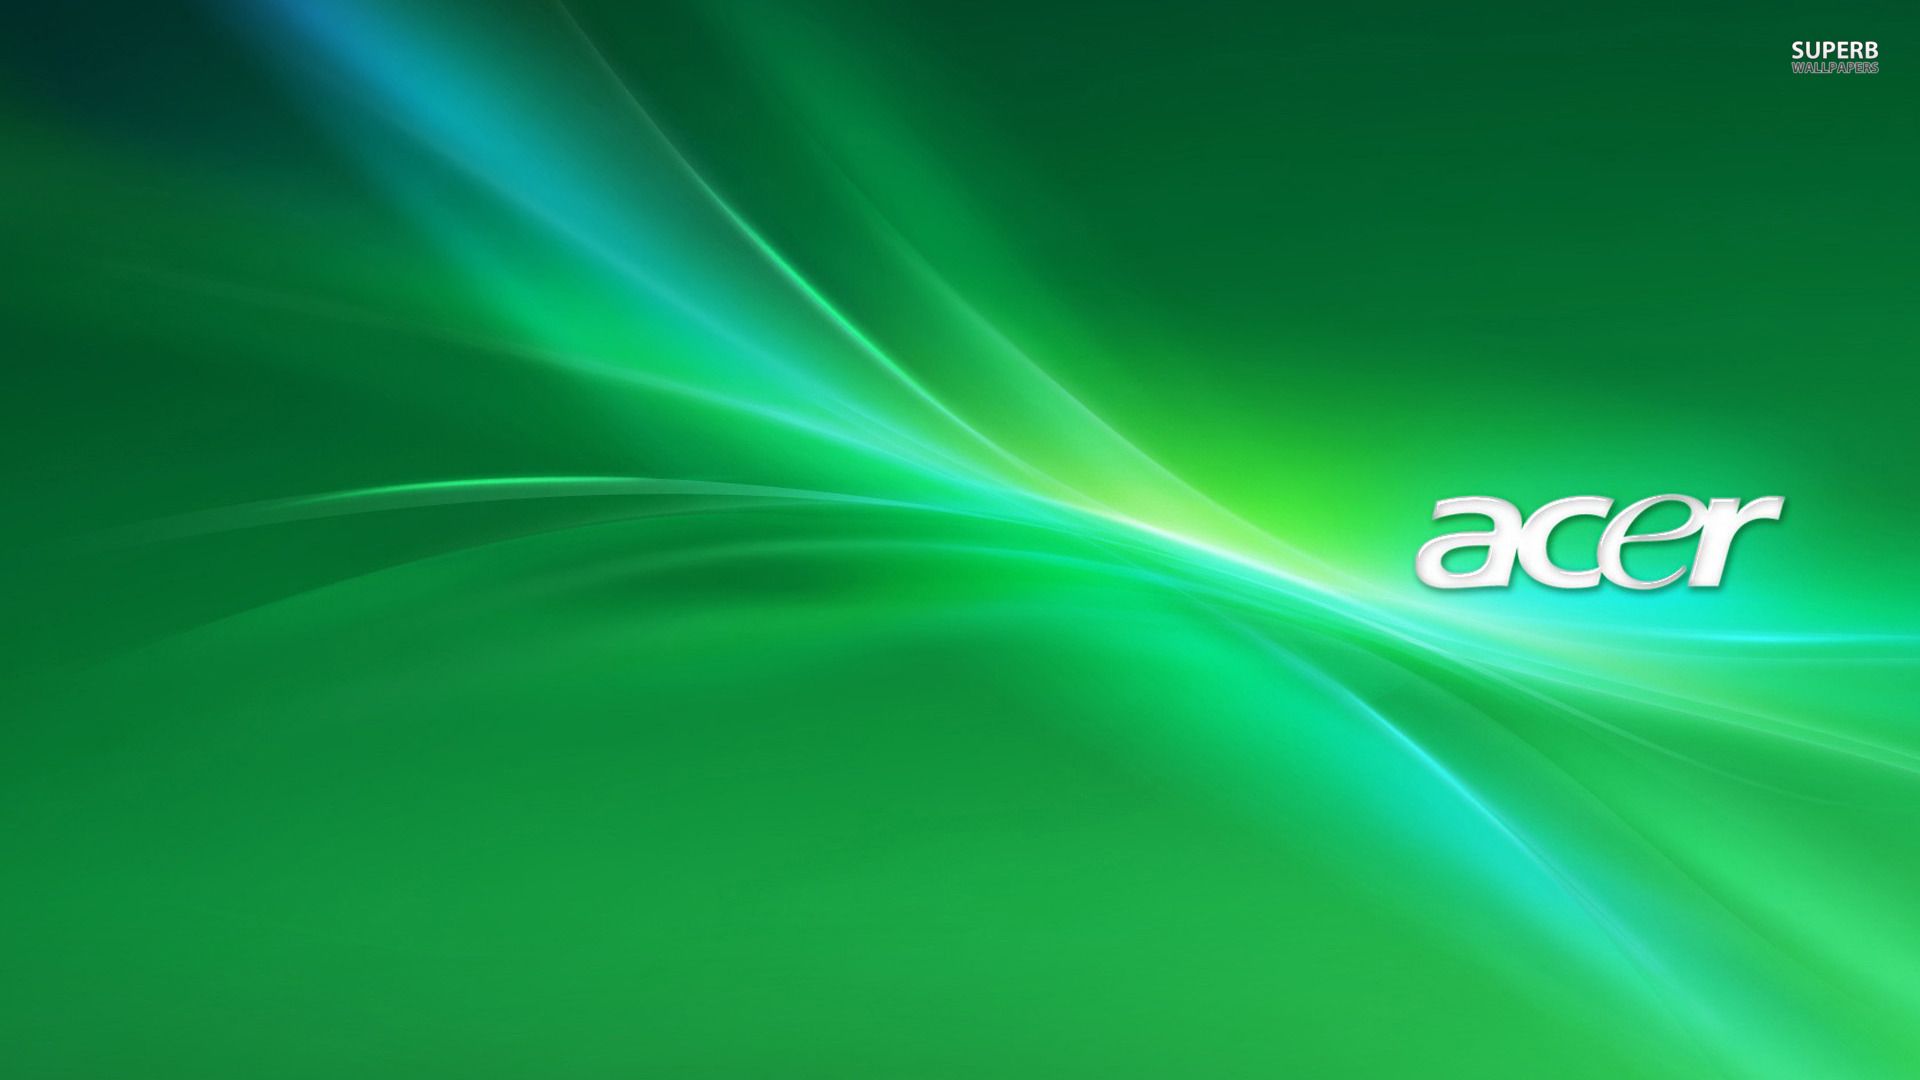 Green Acer logo wallpaper - Computer wallpapers